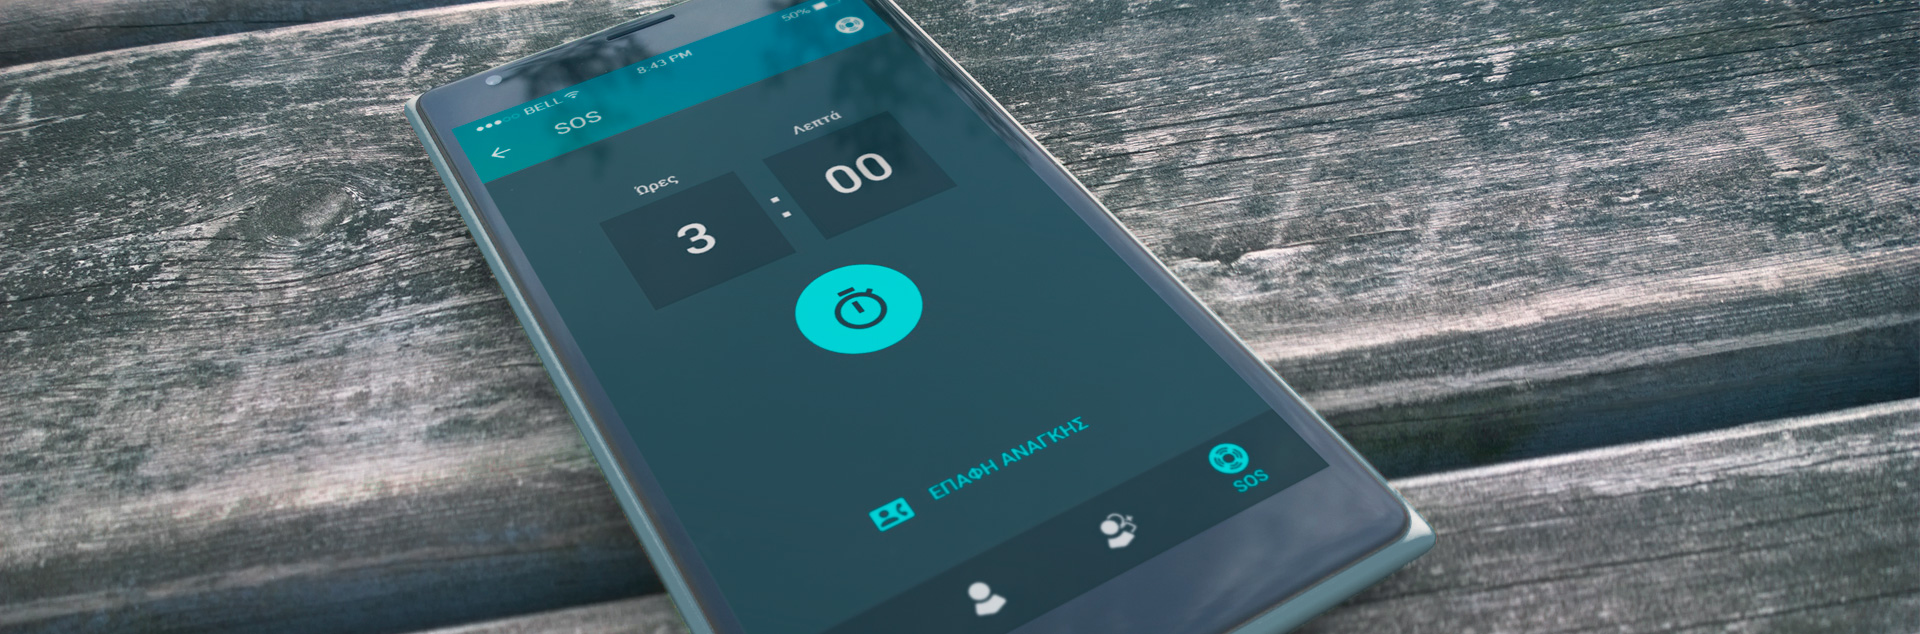 BlueSpear mobile app - alarm